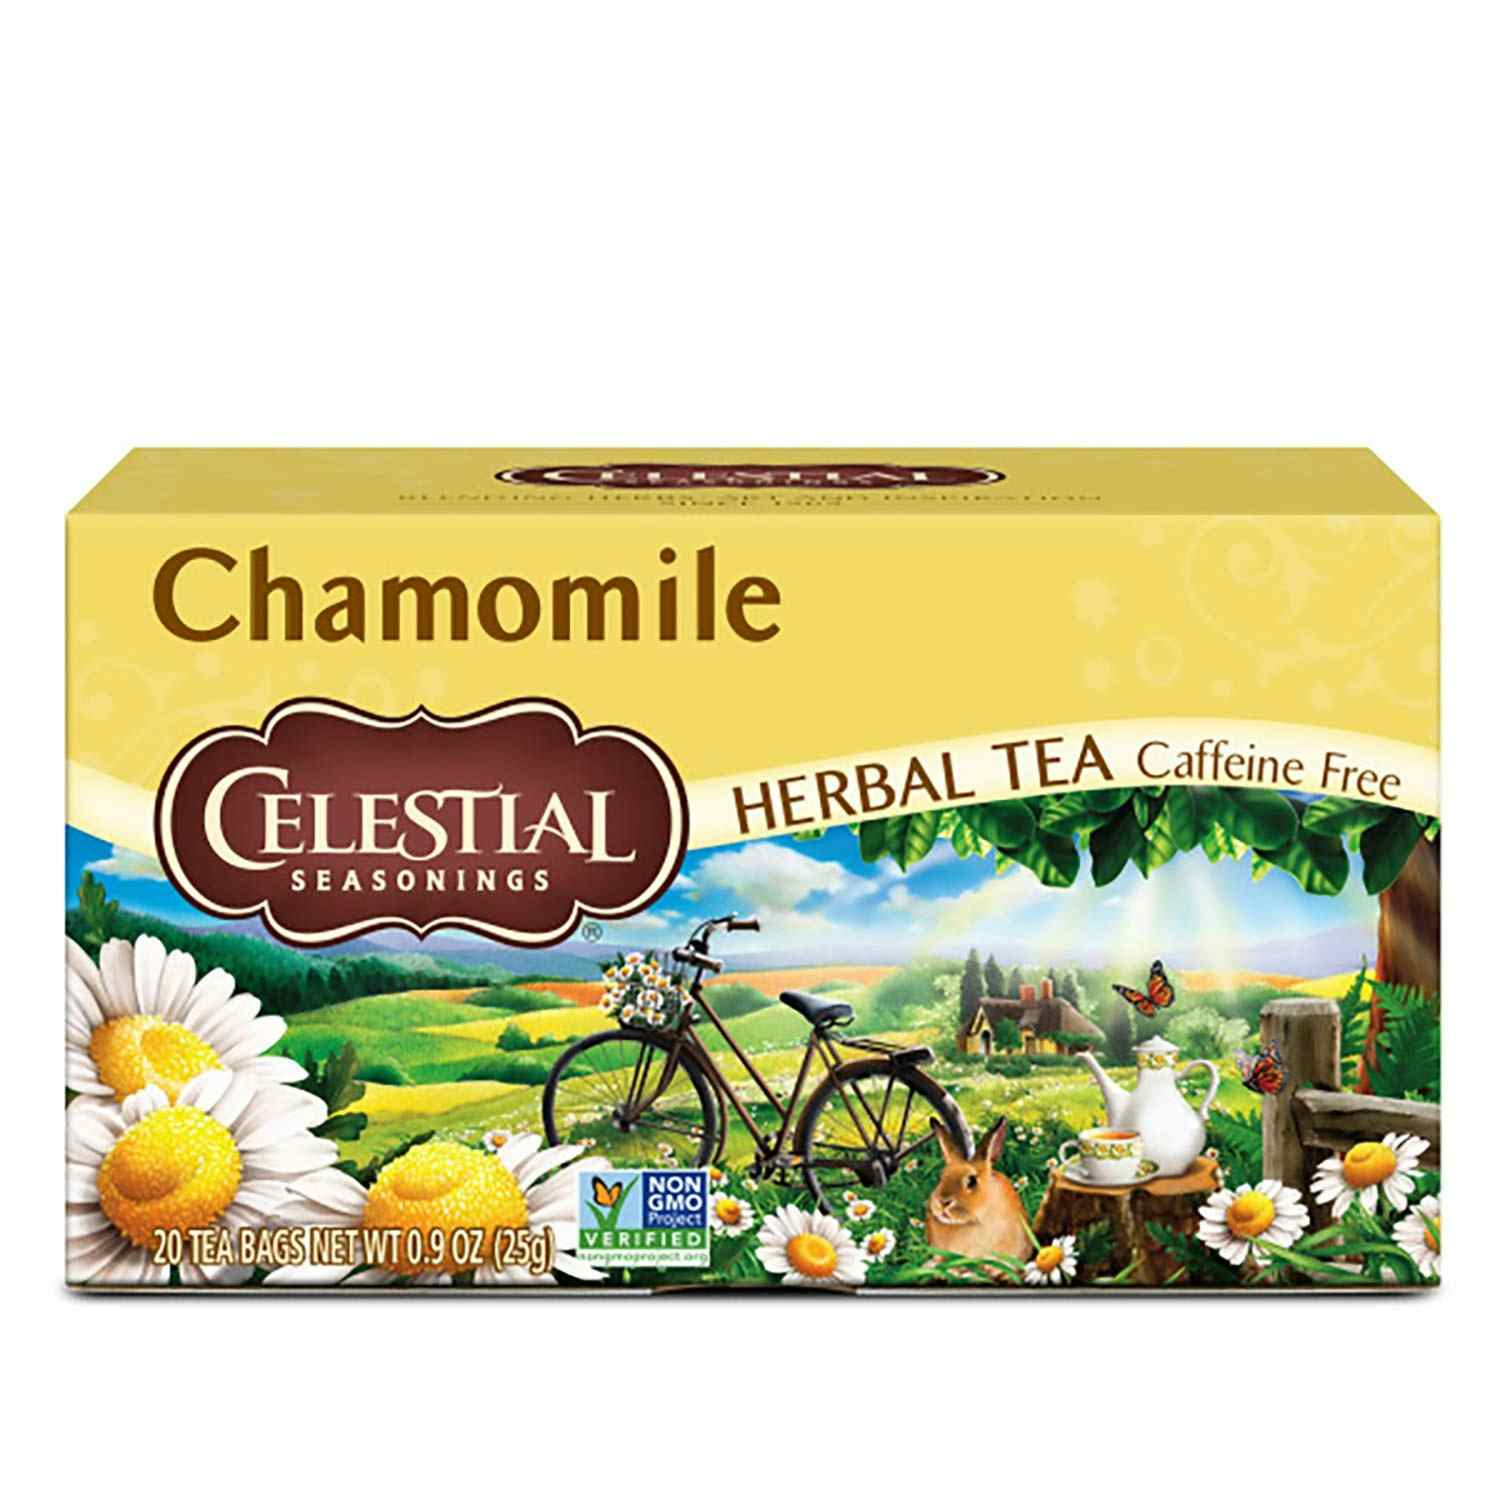 Celestial Seasonings Chamomile Herbal Tea